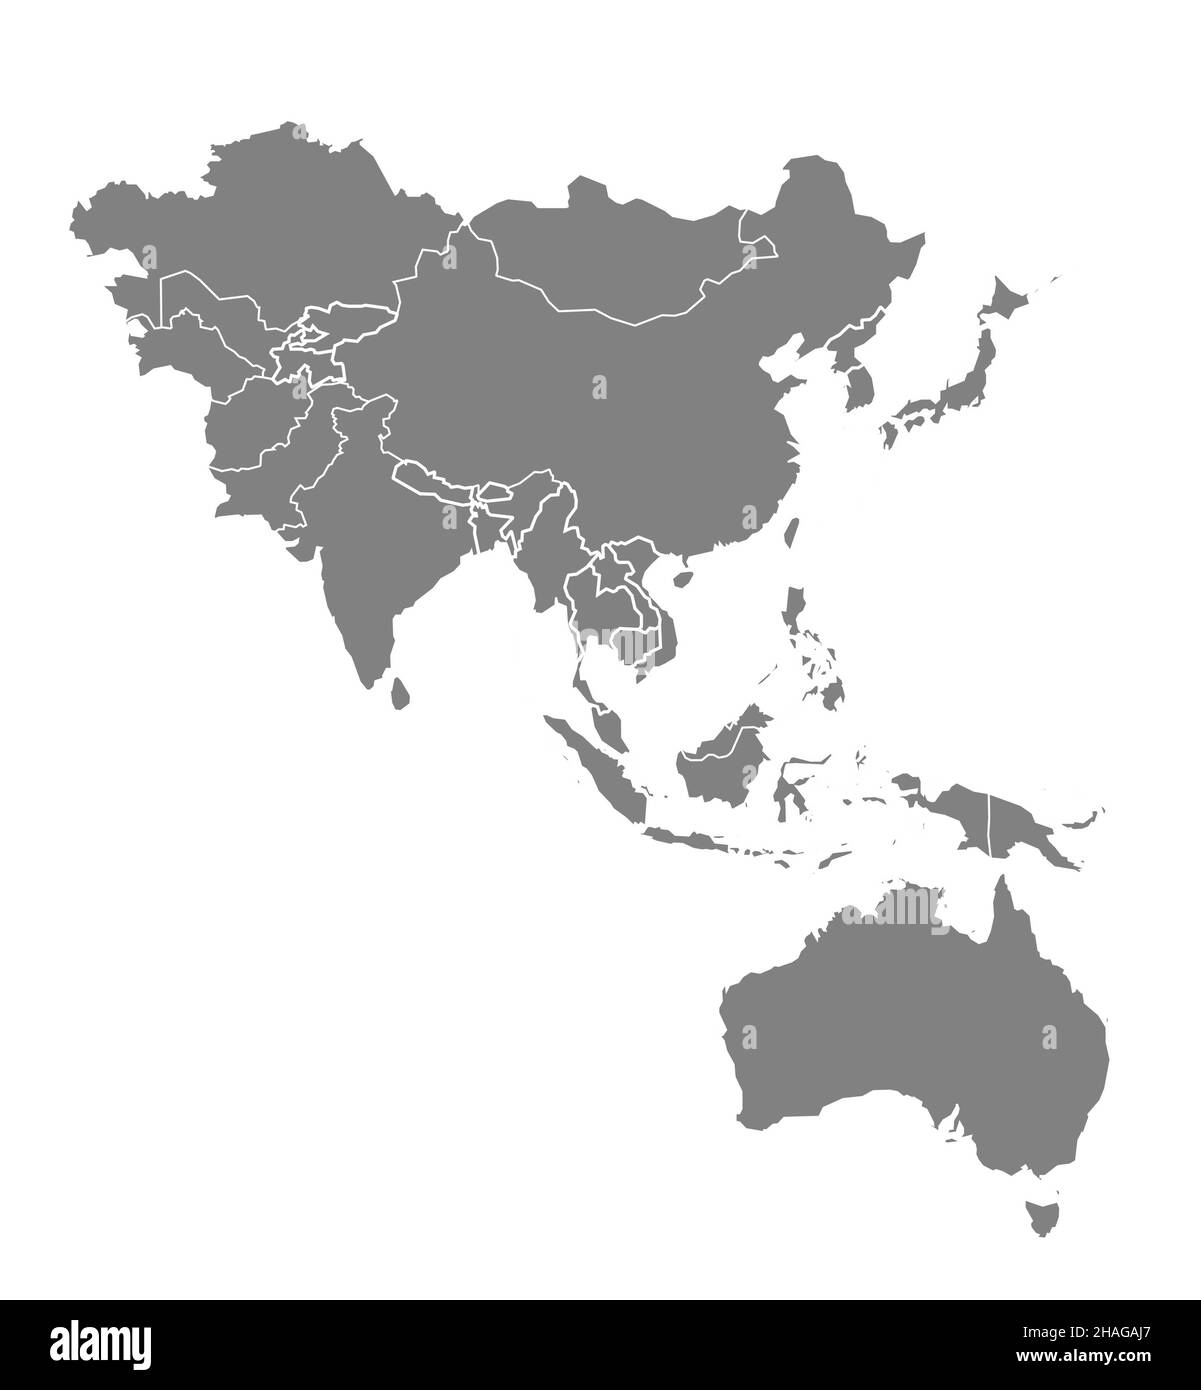 Detaillierte Vektorkarte der Region Asien-Pazifik Stock Vektor